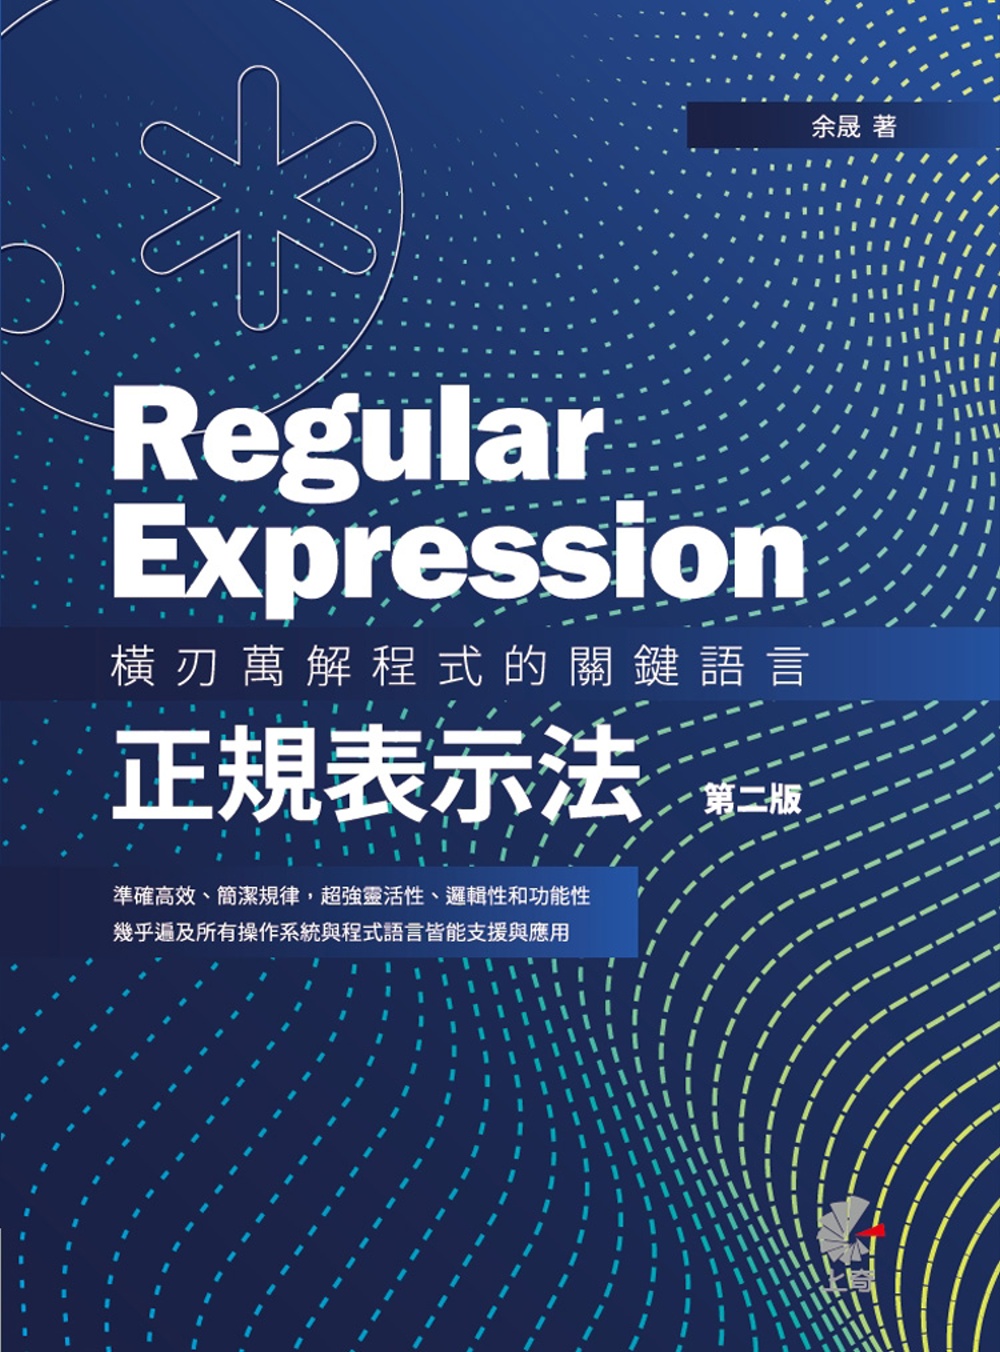 Regular Expression：橫刃萬解程式的關鍵語言-正規表示法 （第二版）